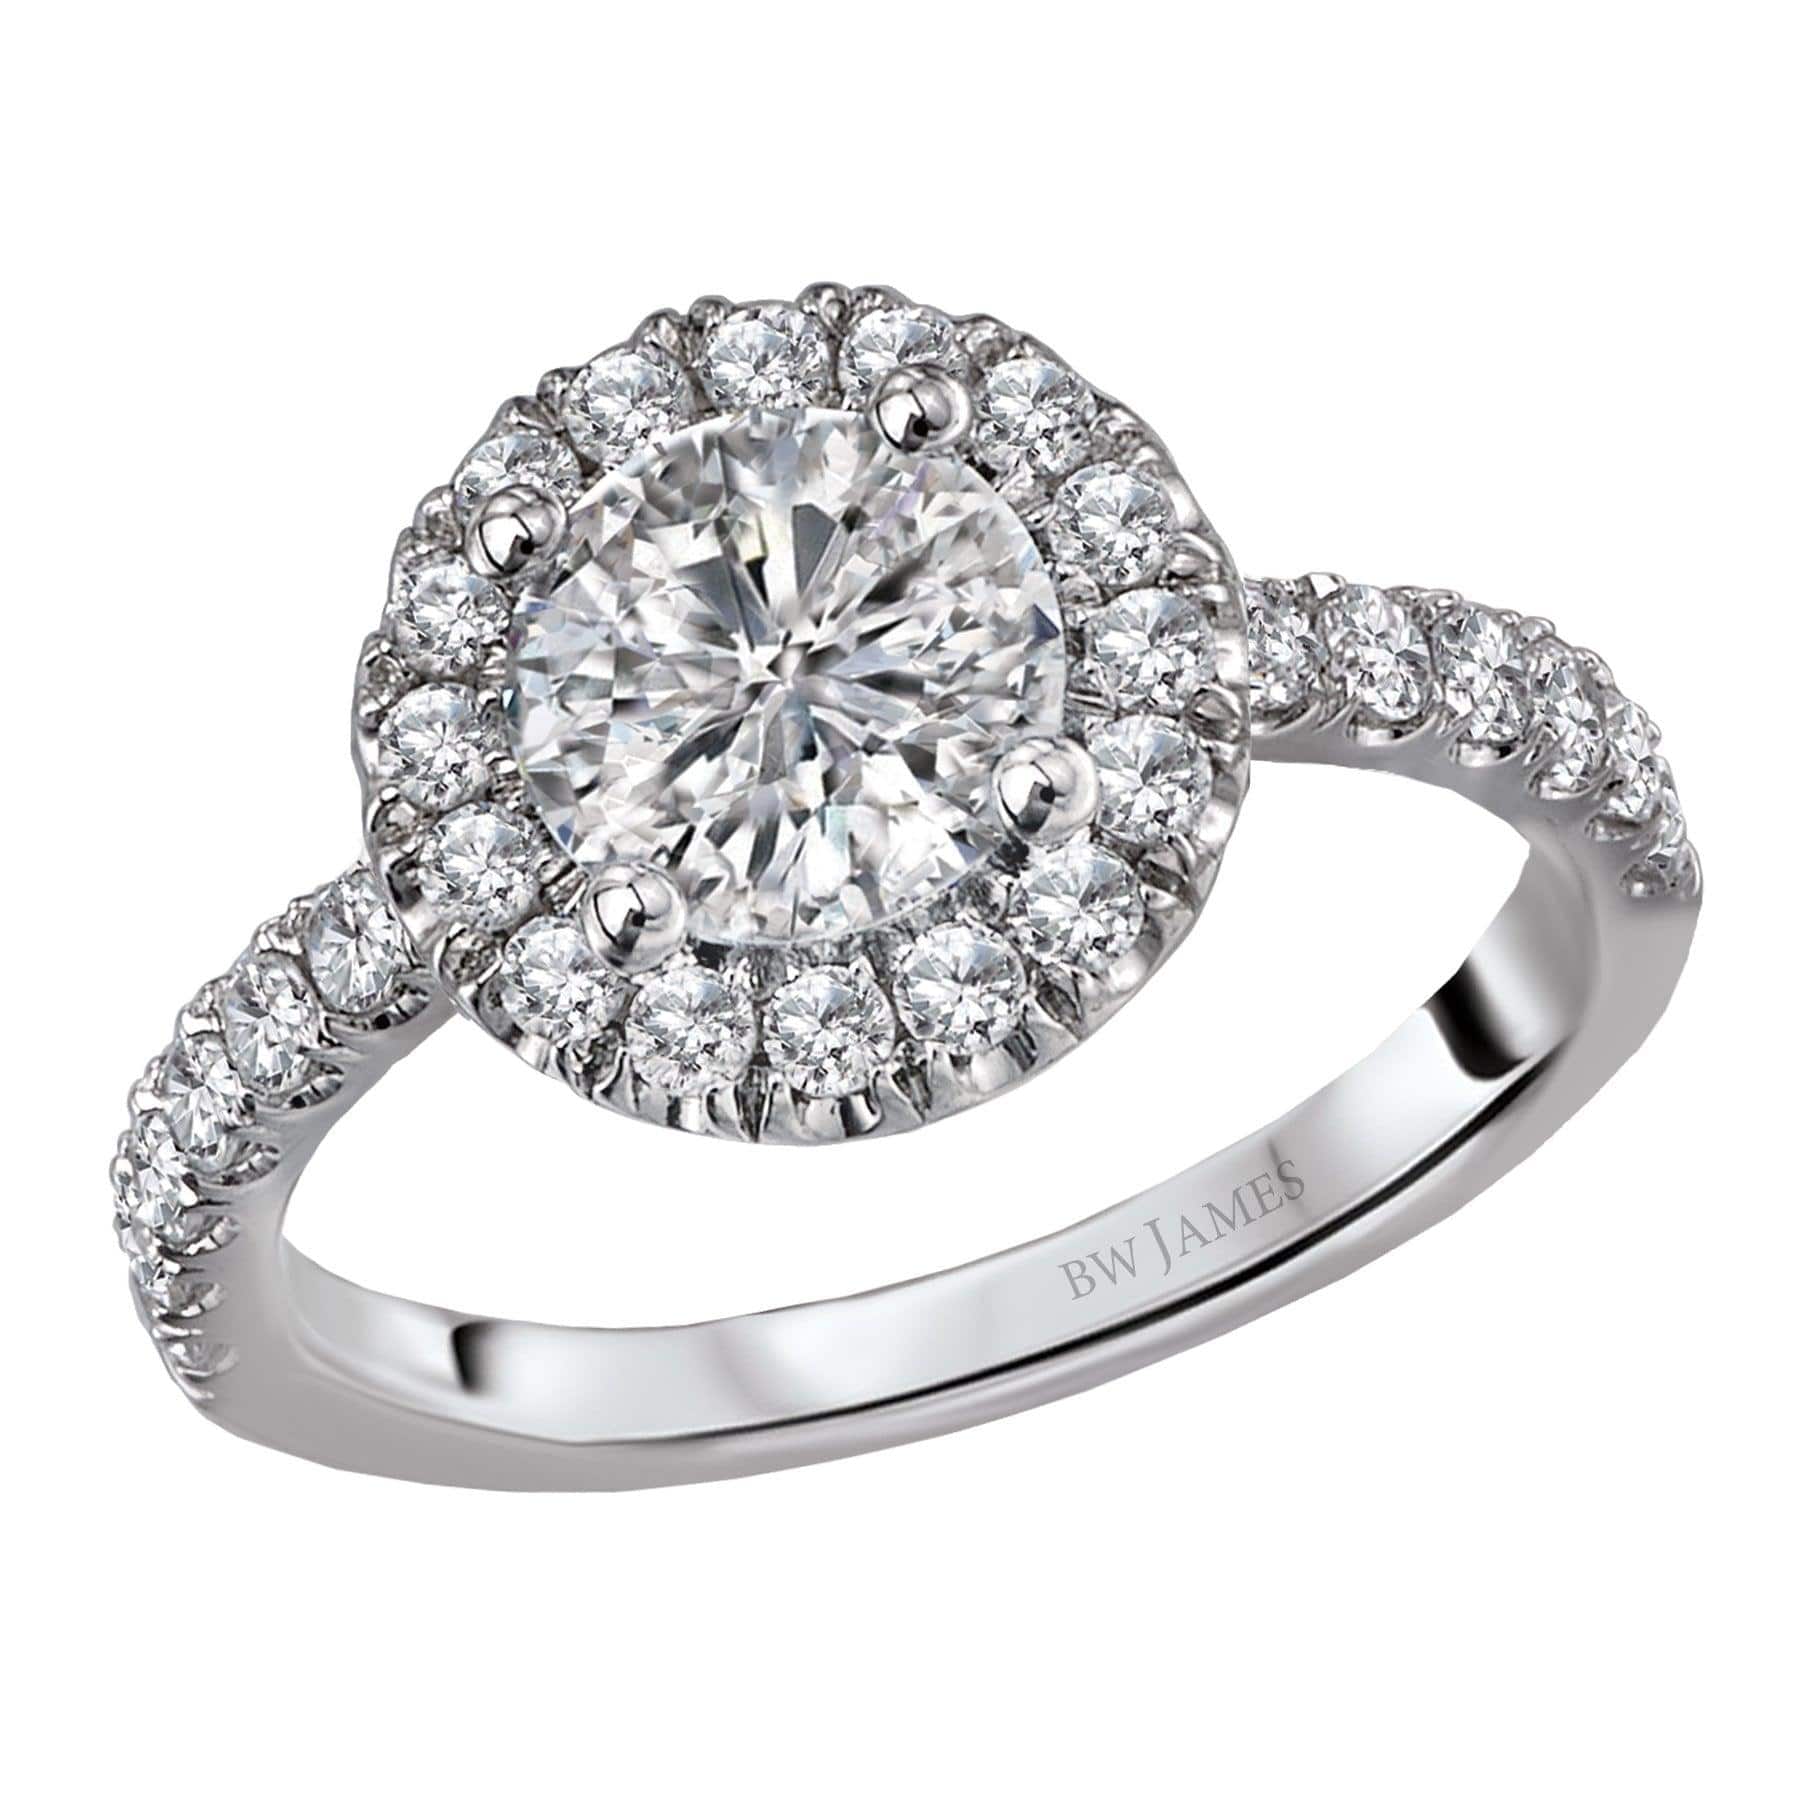 BW JAMES Engagement Rings " The Chelsea" Halo Semi-Mount Diamond Ring